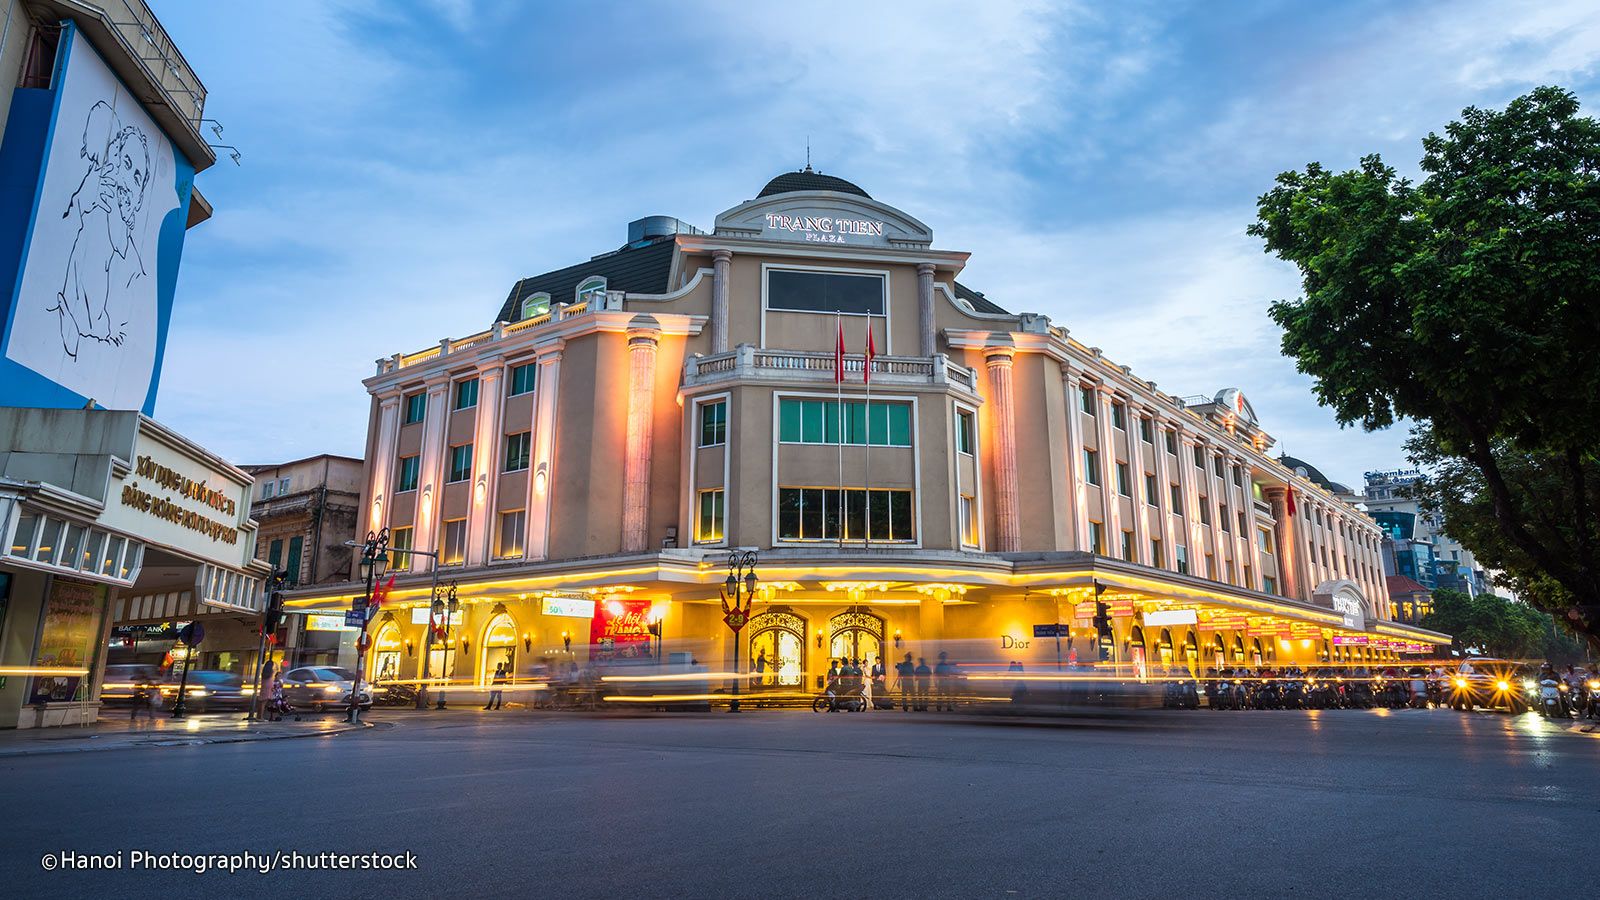 13 shopping malls in Hanoi giving best value for your money